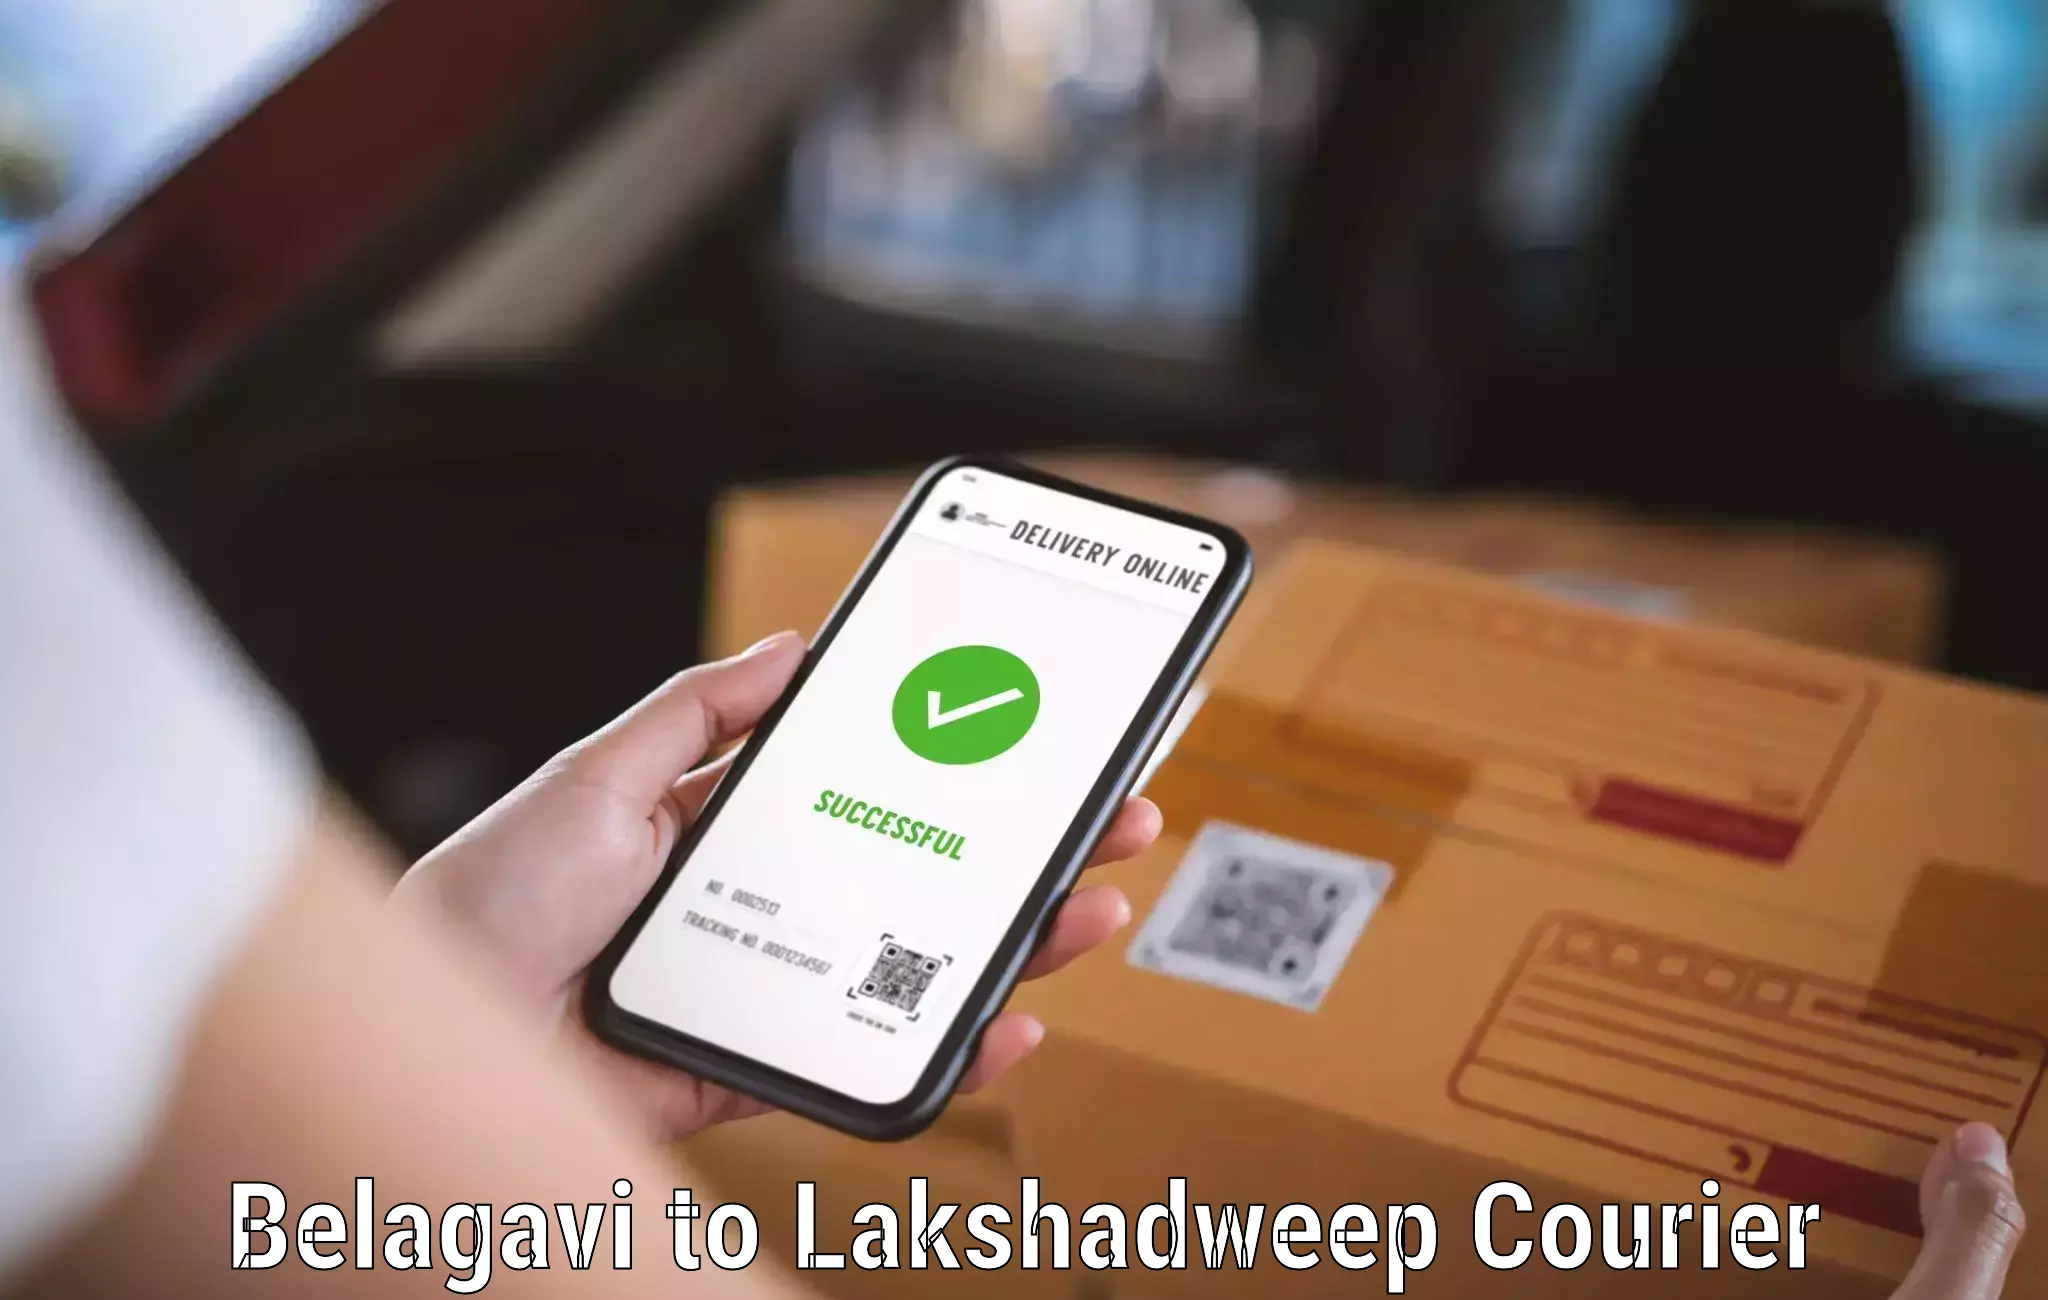 High-priority parcel service Belagavi to Lakshadweep